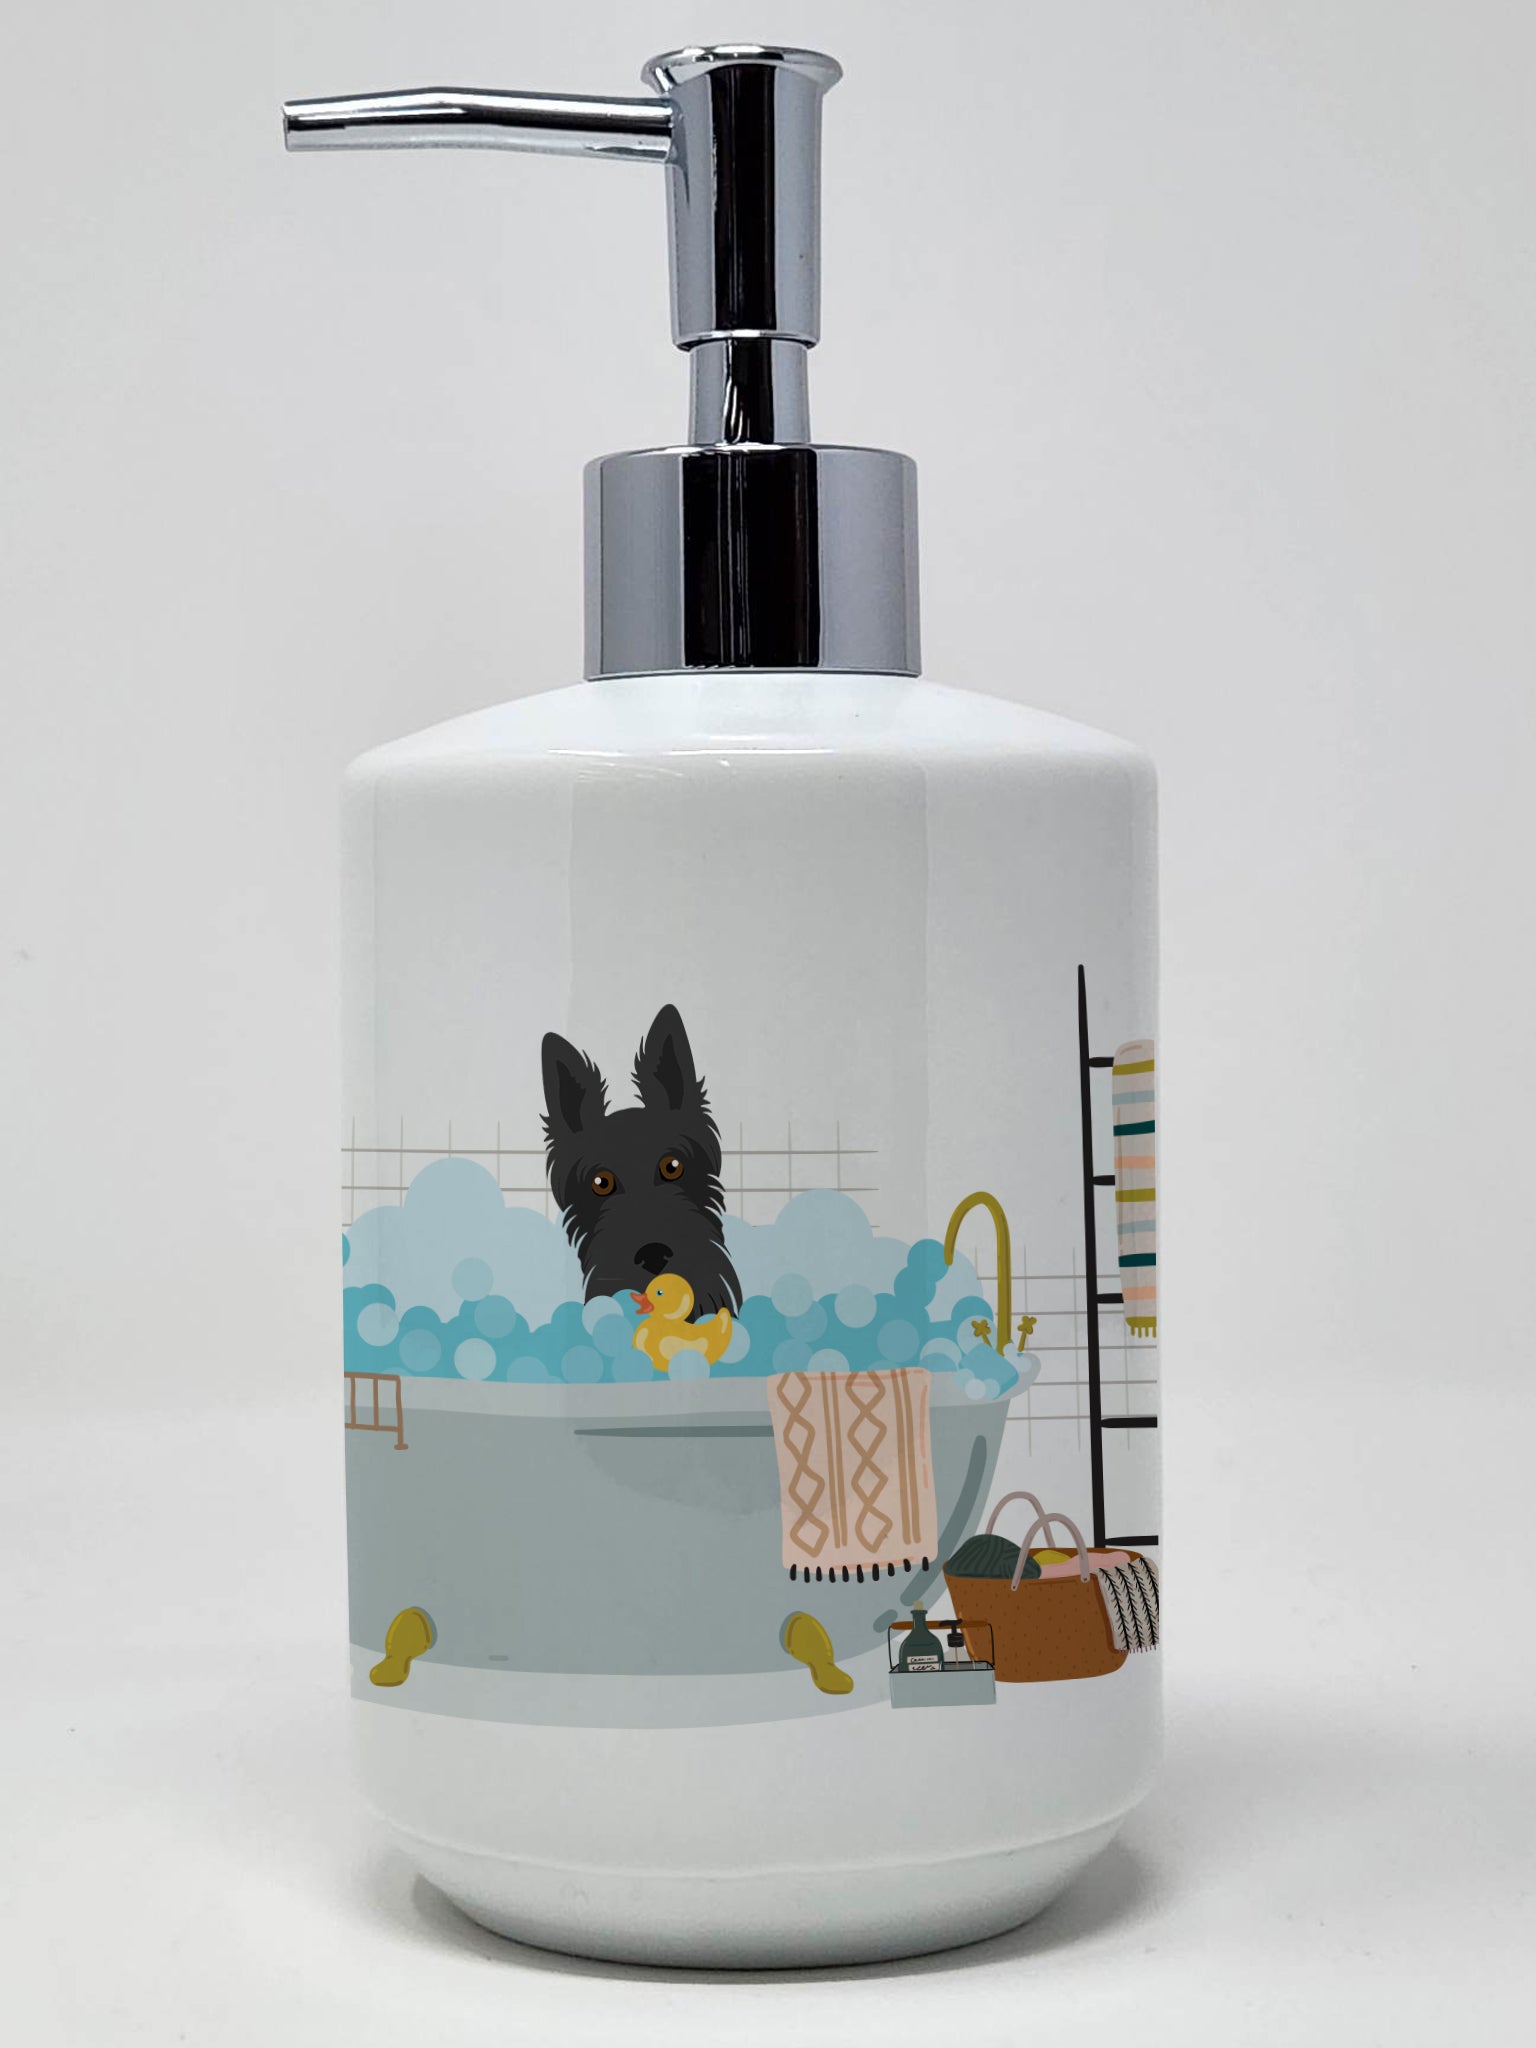 Buy this Black Scottish Terrier Ceramic Soap Dispenser